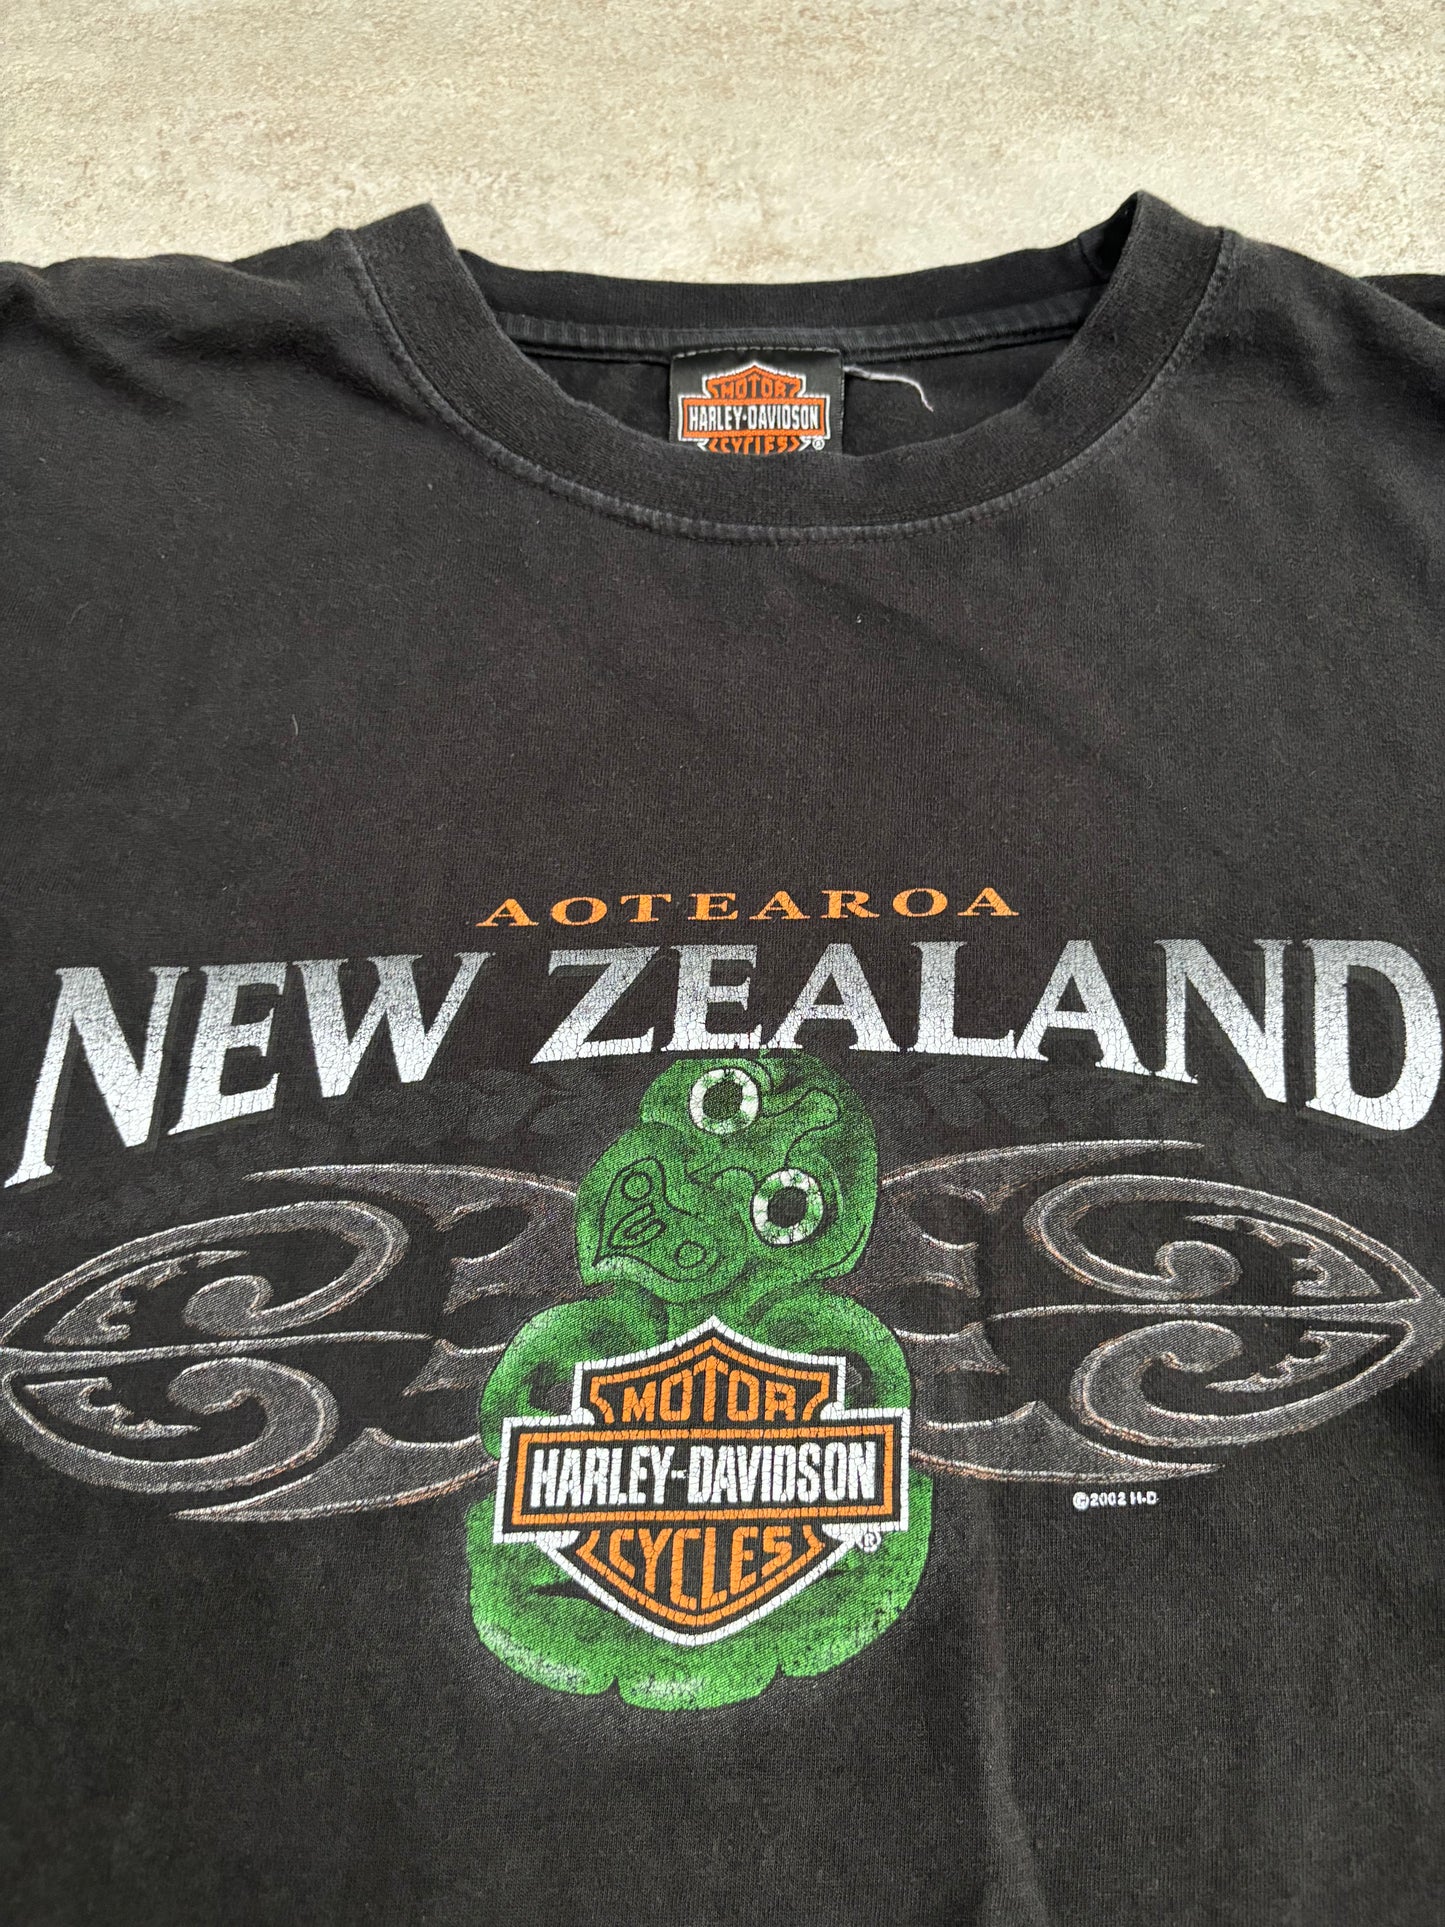 Camiseta Harley Davidson ‘Sun Faded’ New Zealand 2002 Vintage - M